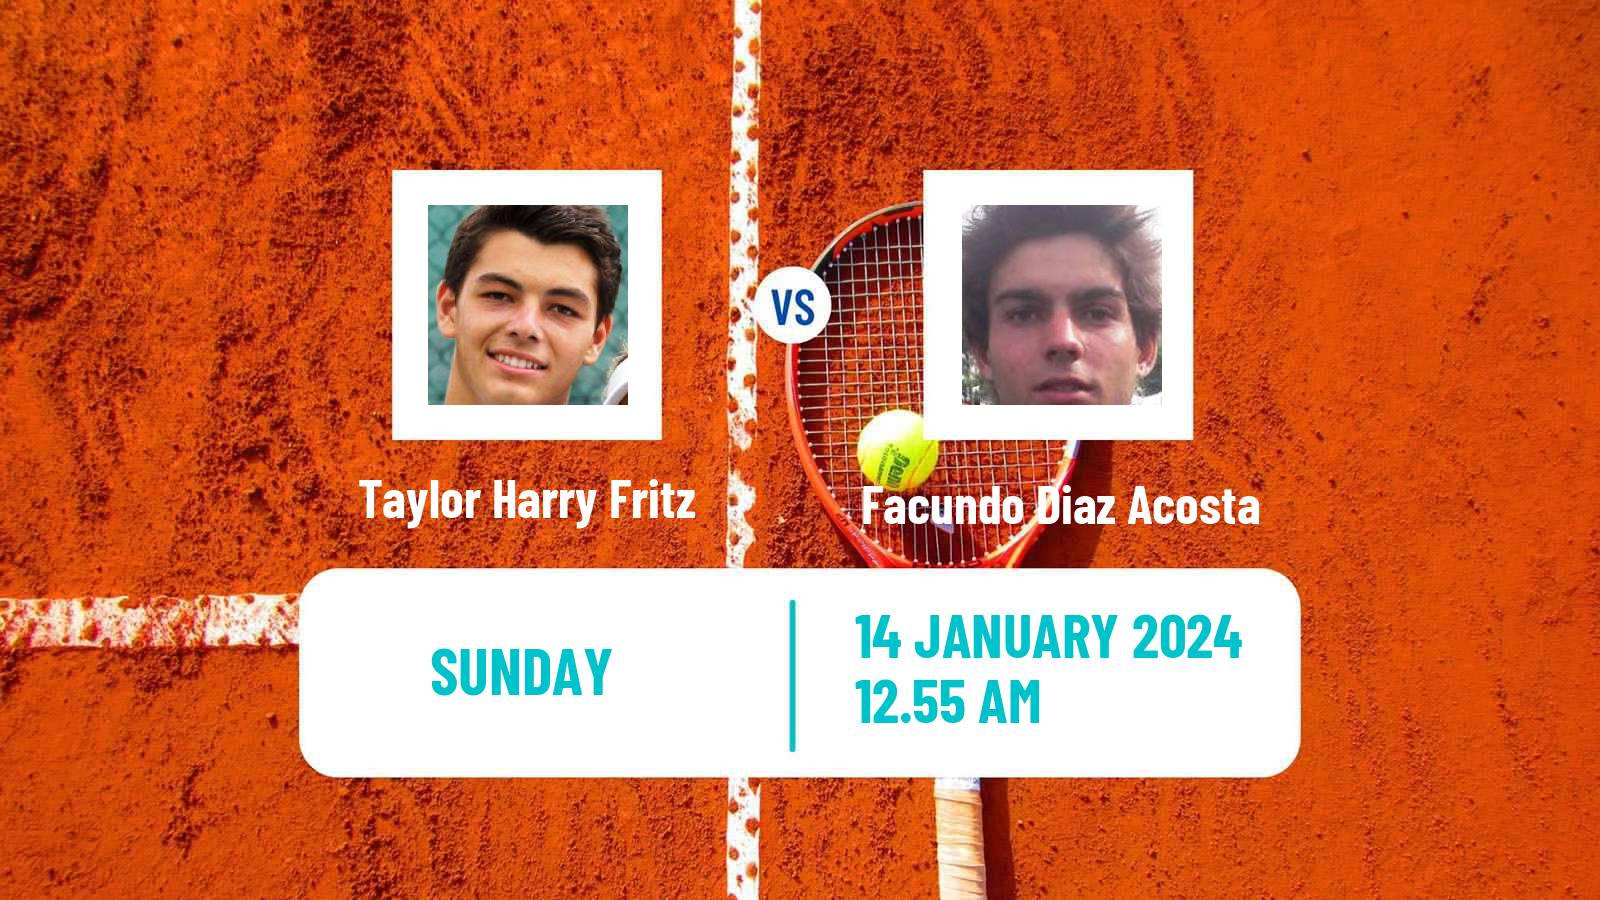 Tennis ATP Australian Open Taylor Harry Fritz - Facundo Diaz Acosta